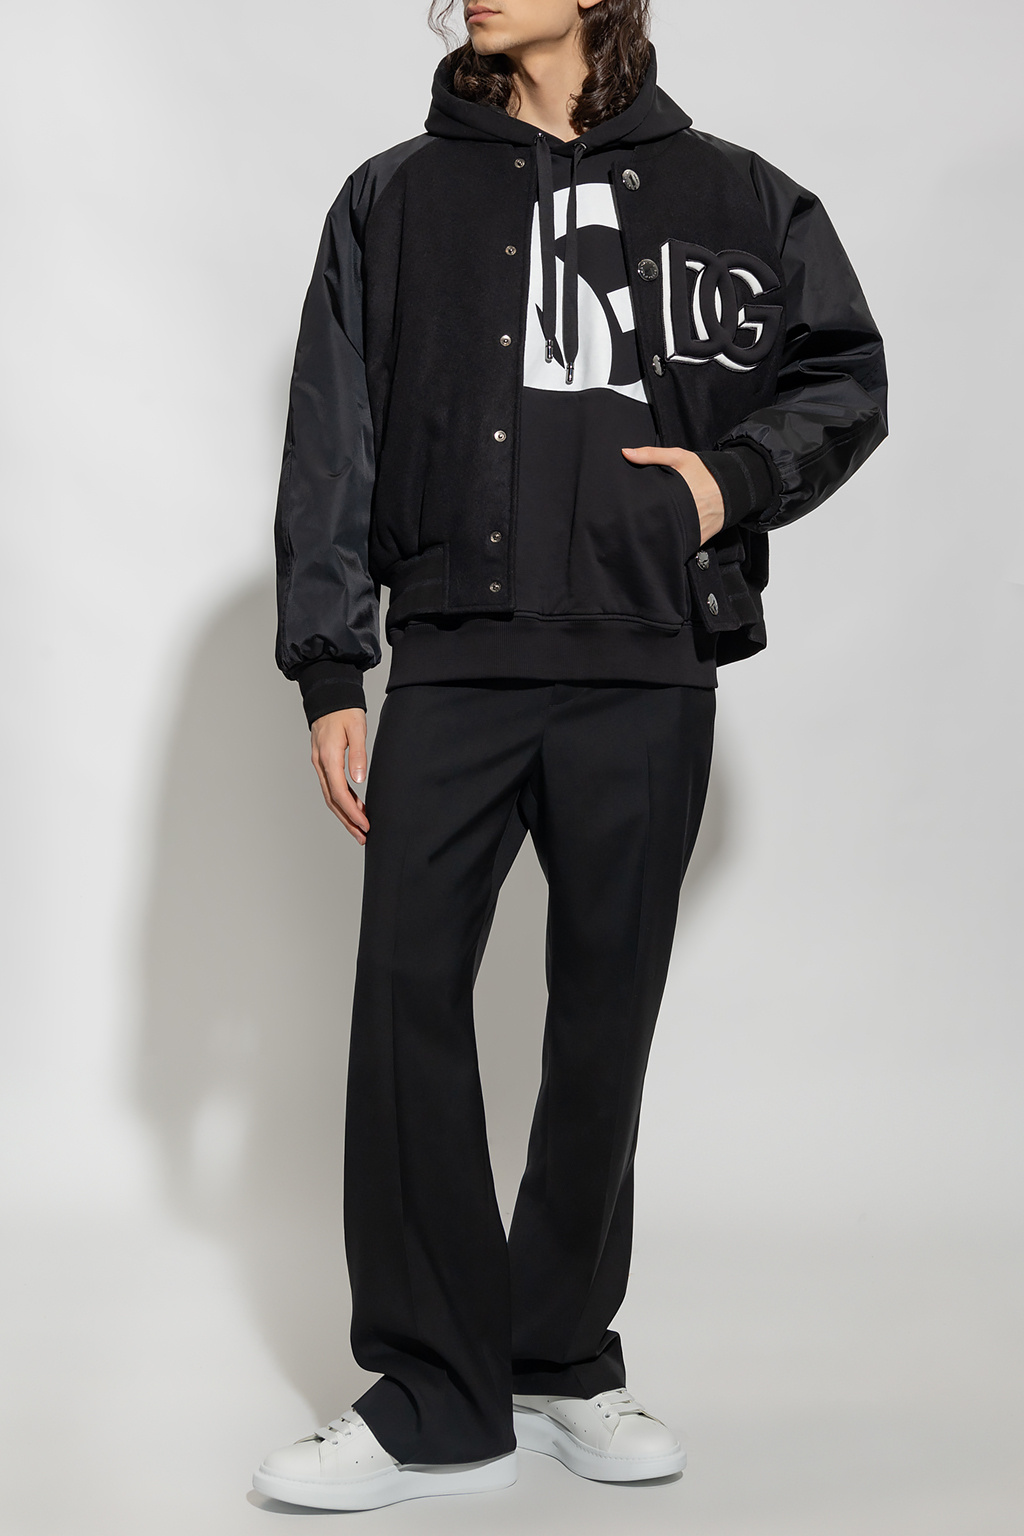 N0000 BLACK Synthetic Spandex Elastane logo print swim trunks from Dolce & Gabbana Bomber jacket